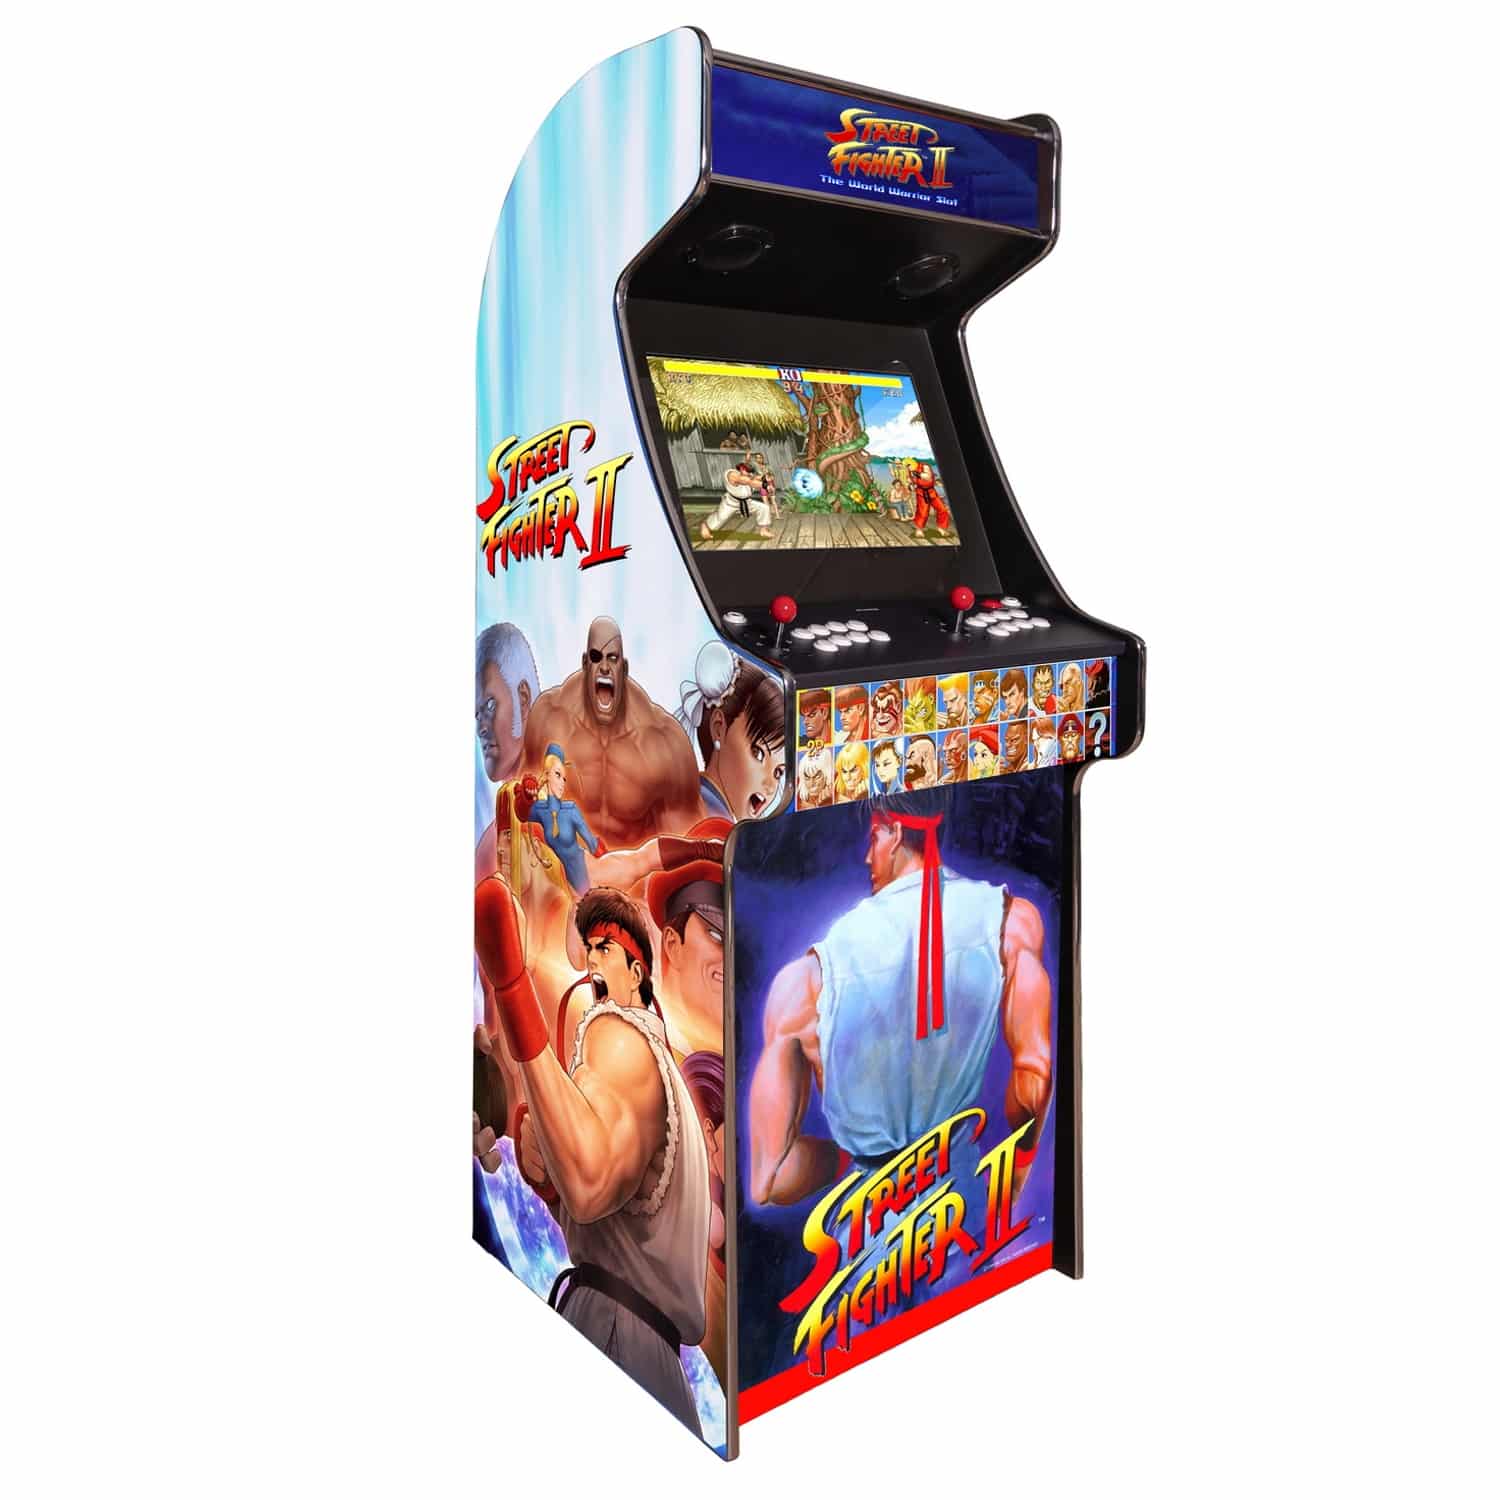 arcade machine borne born jeux cafe anciens retro recalbox neuve moderne hdmi pas cher vente achat prix france belgique streetfighter - Home